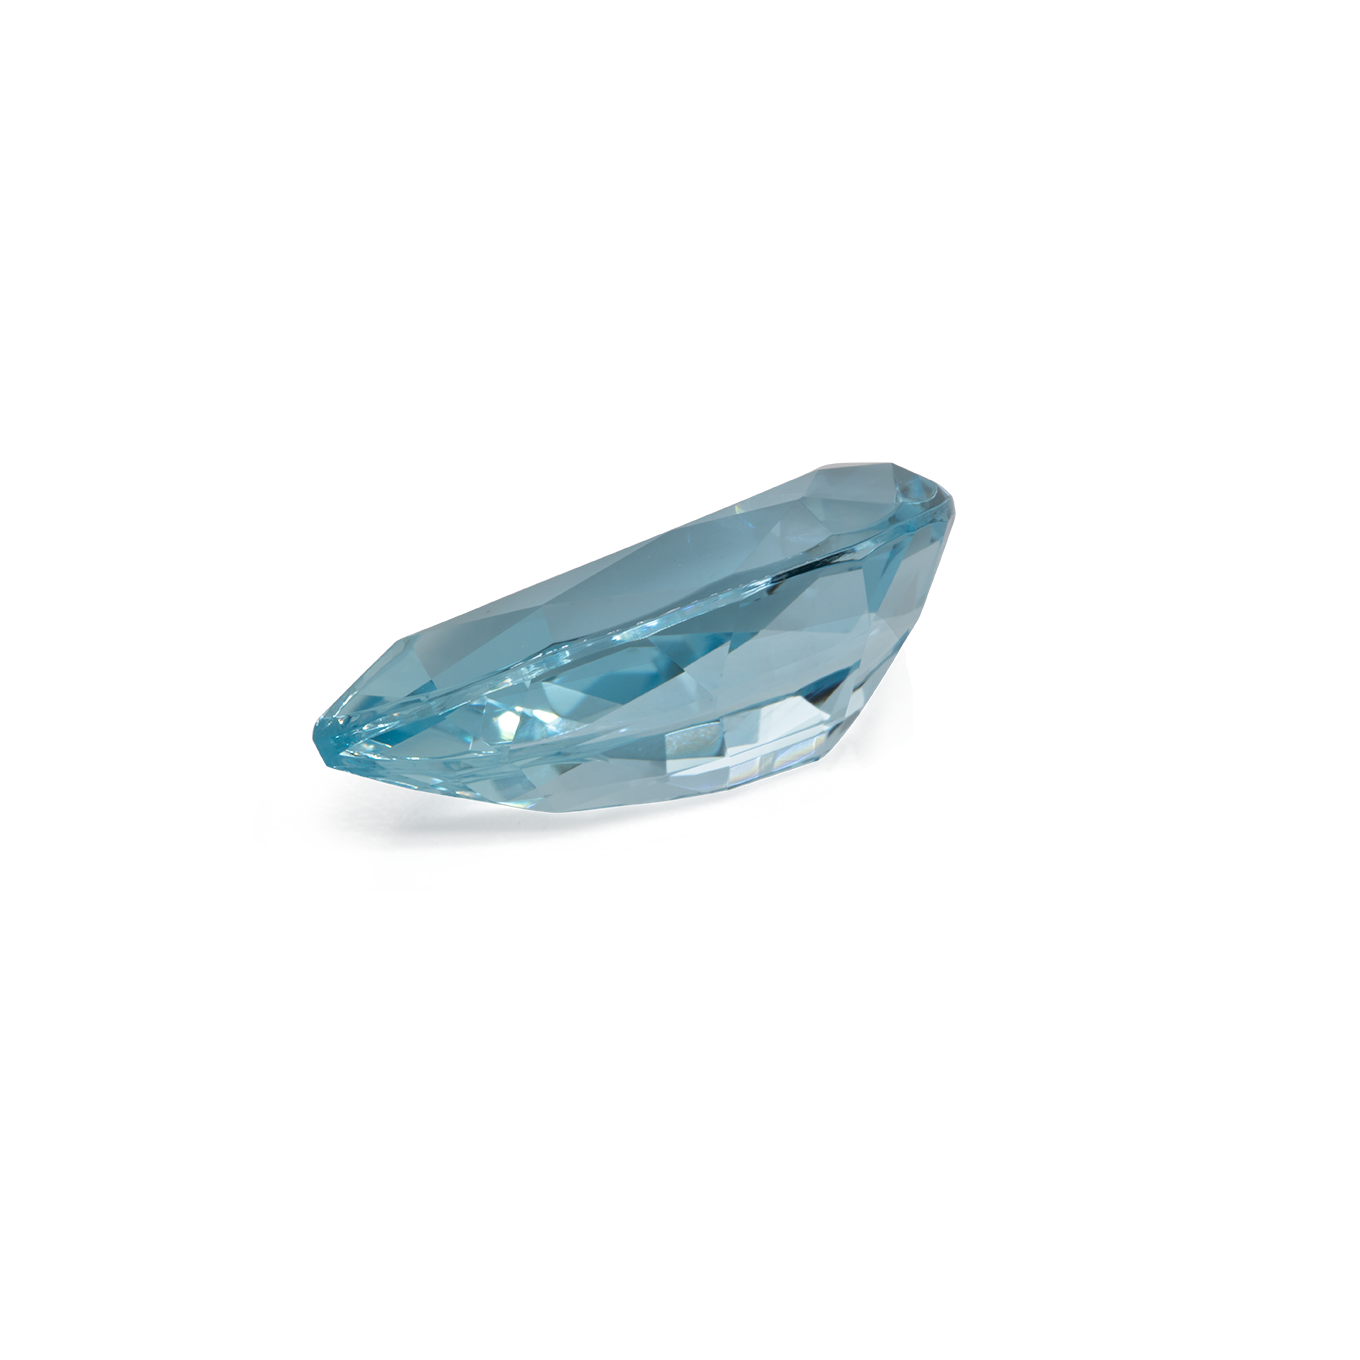 Aquamarine - AA, pearshape, 17x10 mm, 5.69 cts, No. A96001